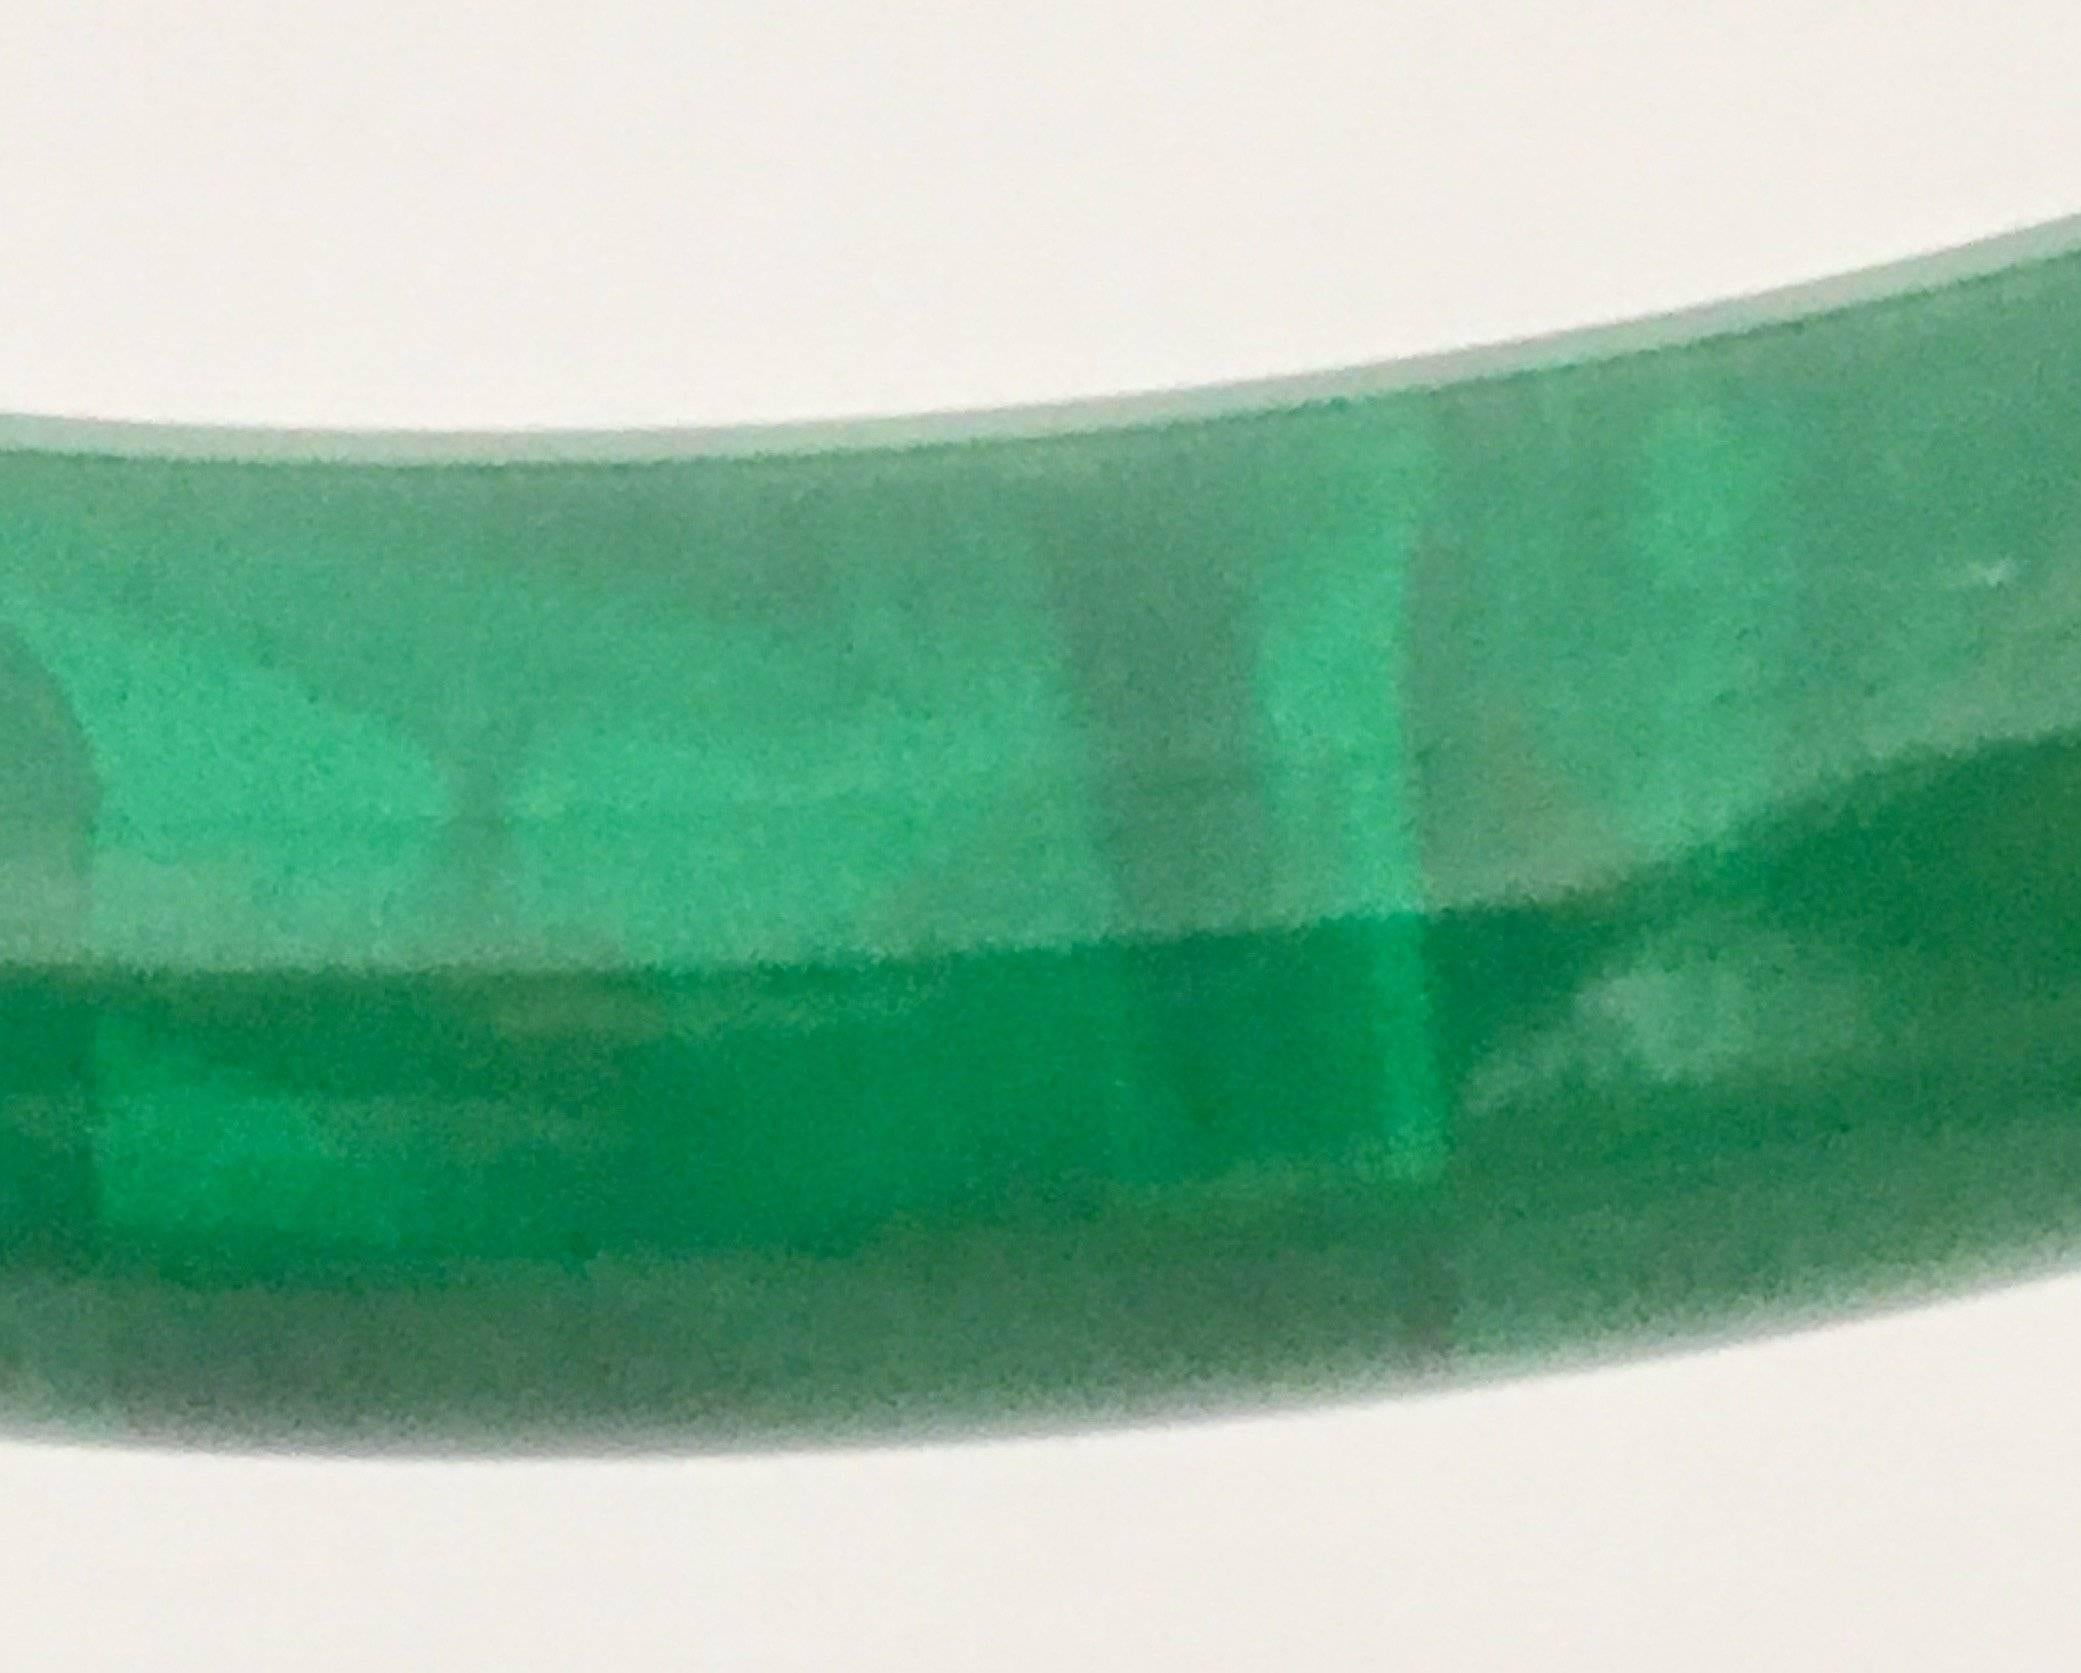 Mid-Century rare emerald green translucent bakelite bangle bracelet. Interior diameter measures, 2.65